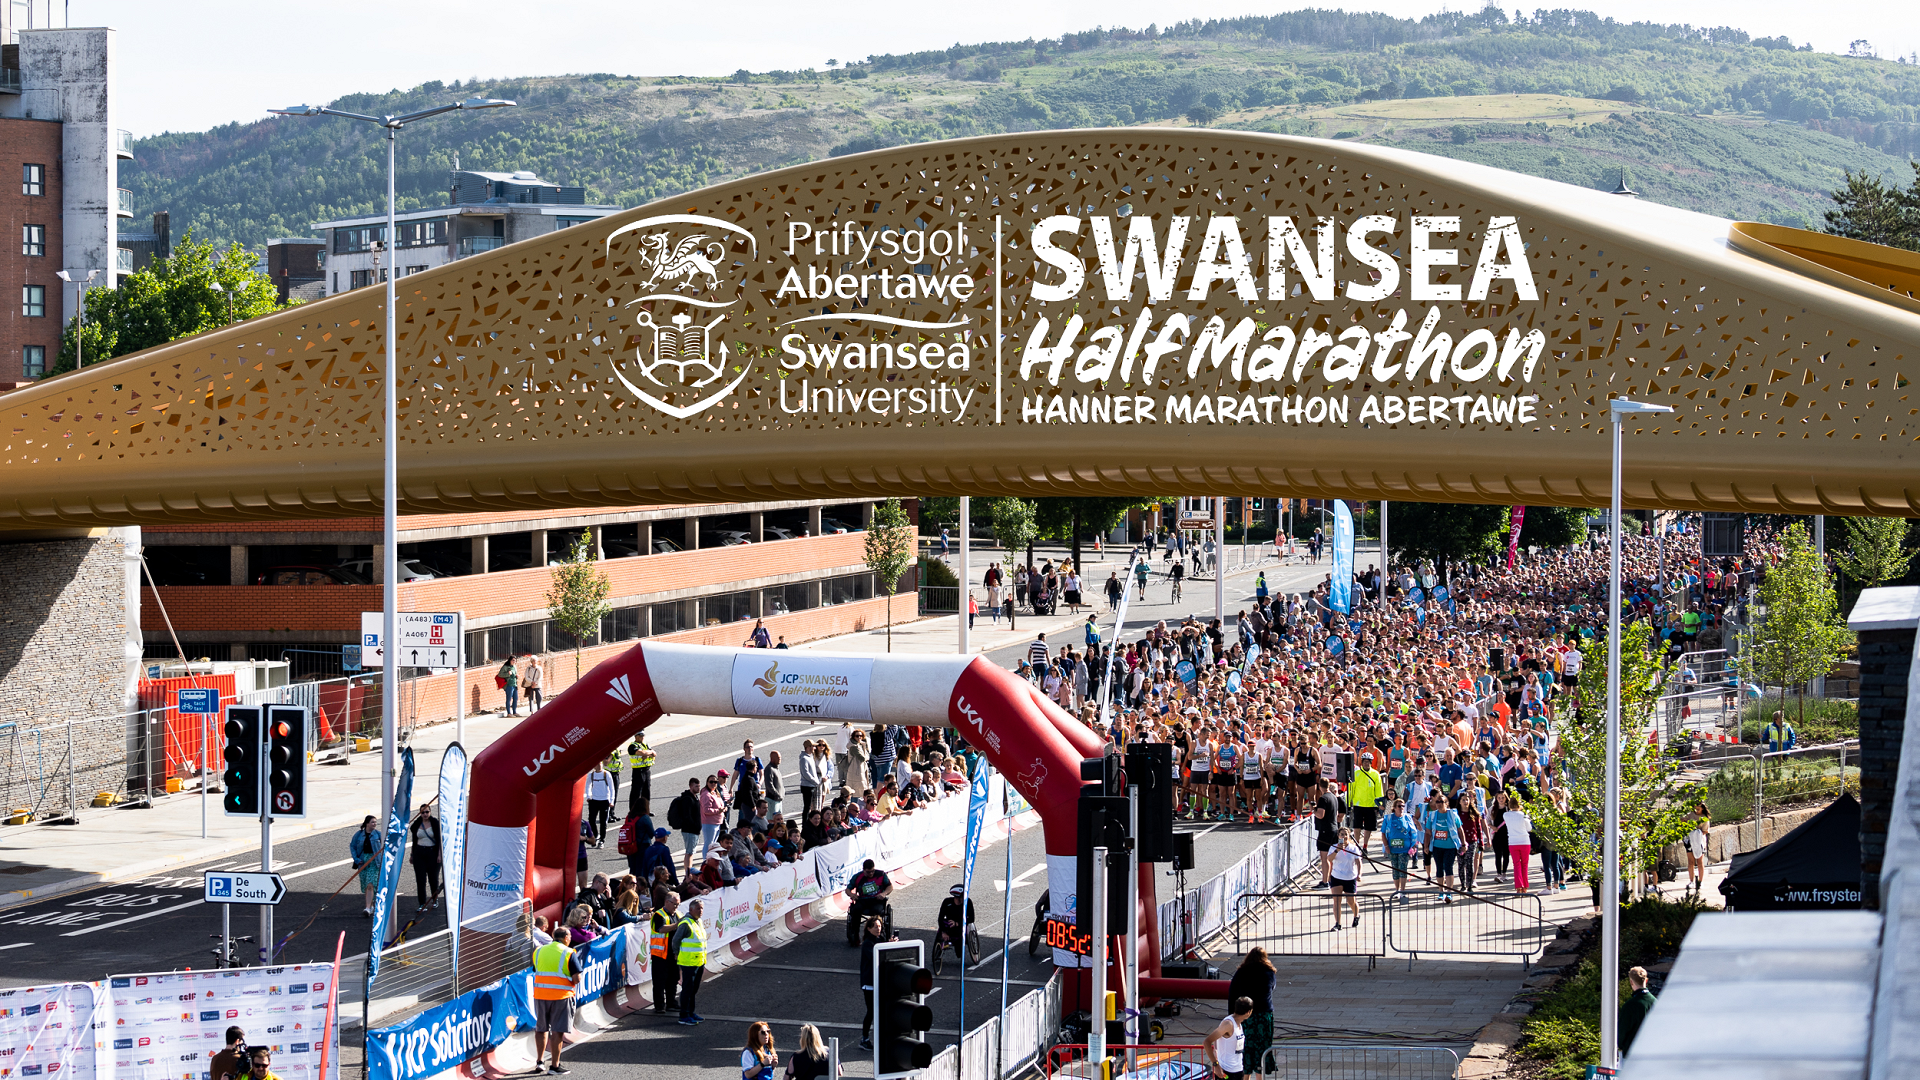 Swansea University announced as new title sponsor of the Swansea Half Marathon